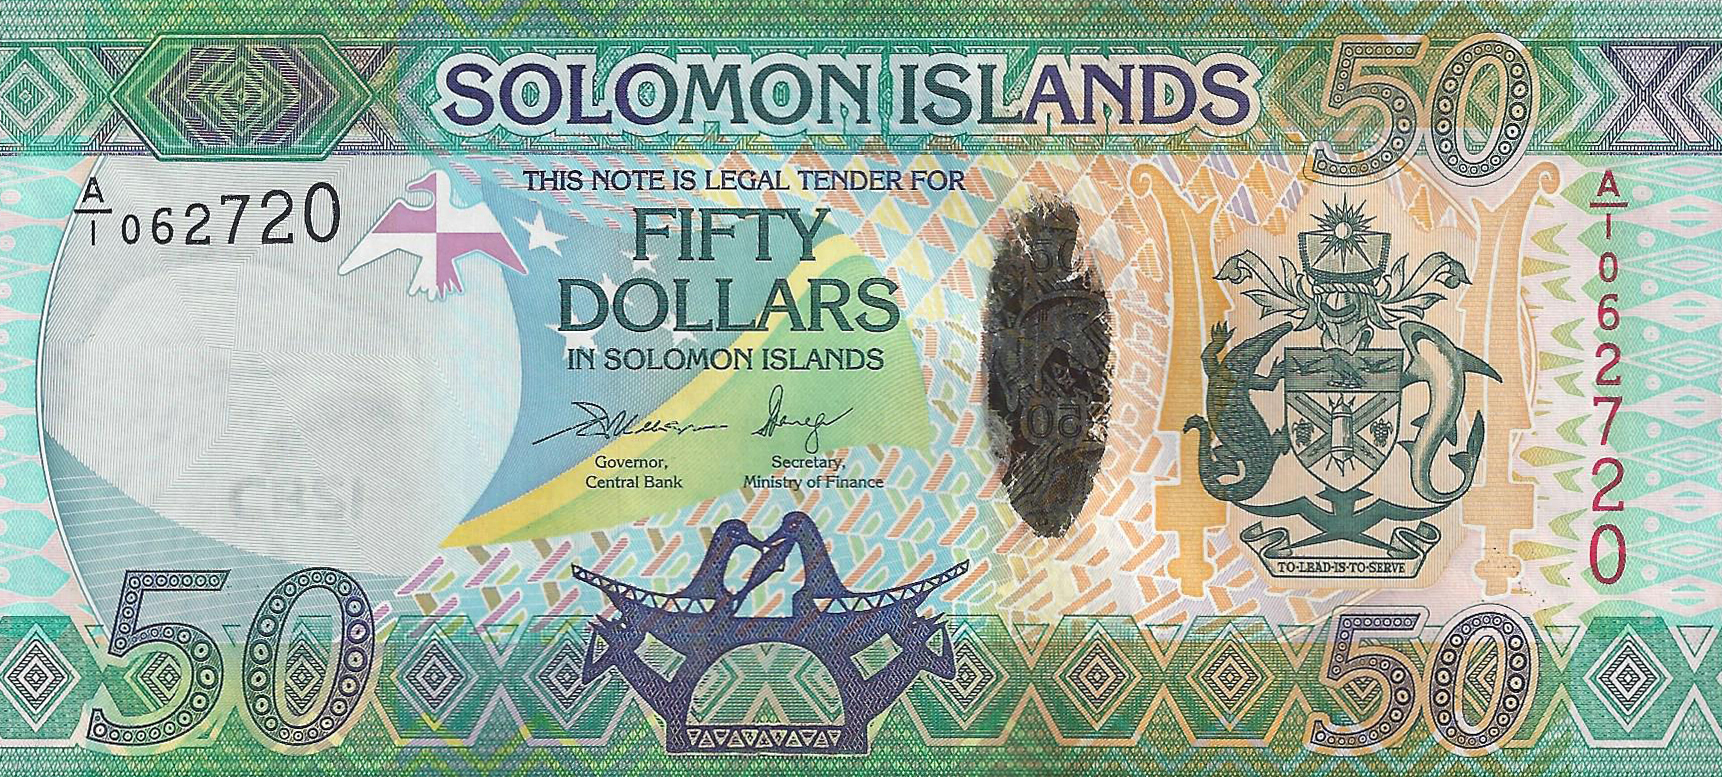 solomon-islands-new-50-dollar-note-b224a-confirmed-banknotenews